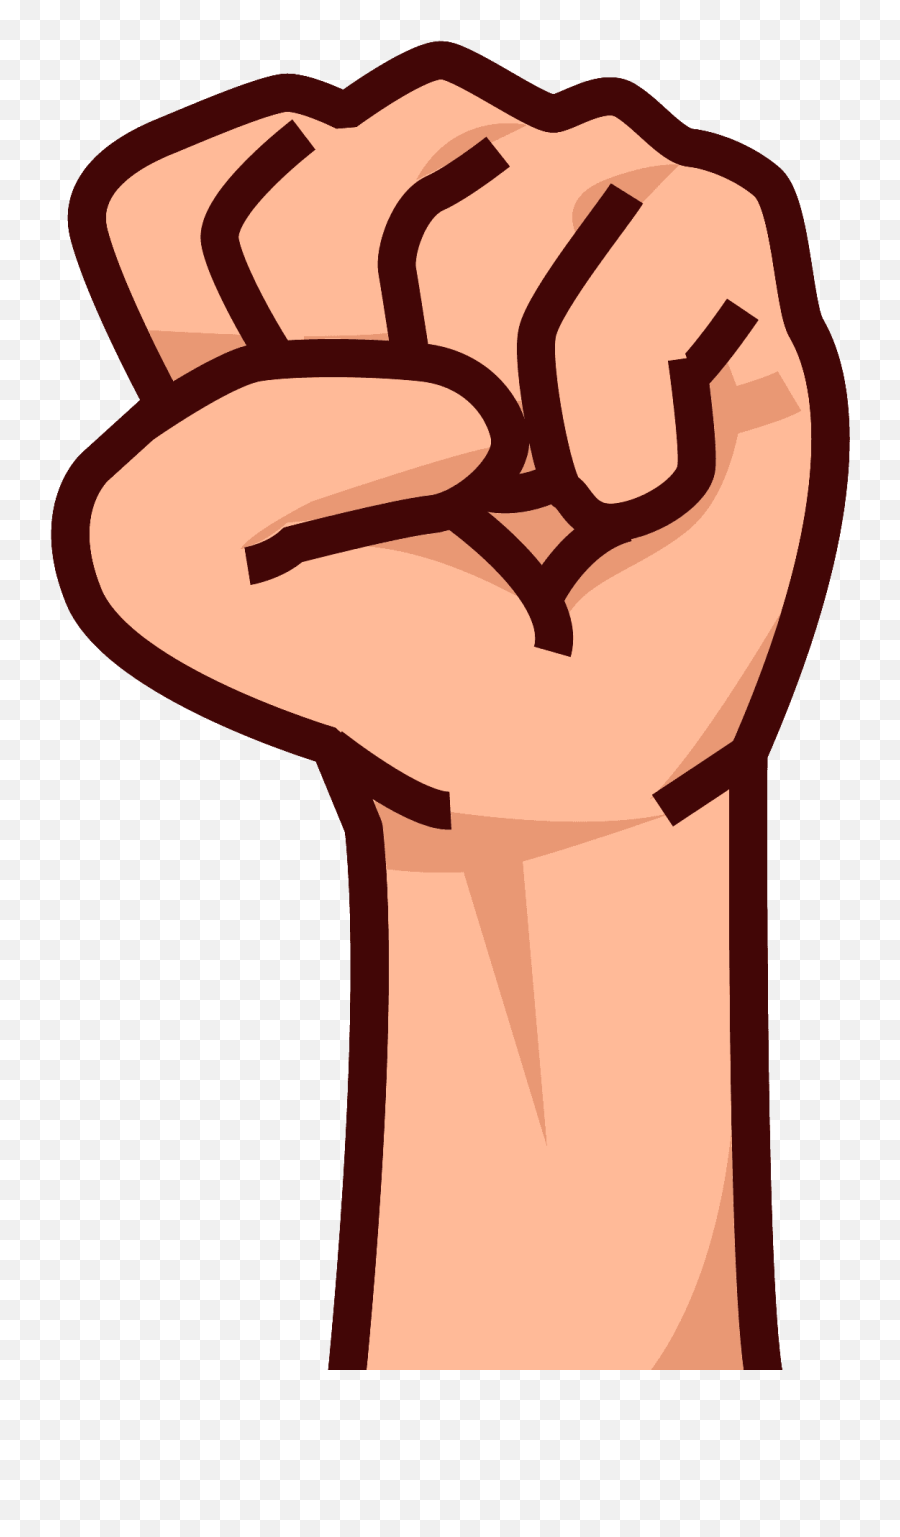 Raised Fist Emoji Clipart - Puño En Alto Dibujo,Fist Emojis